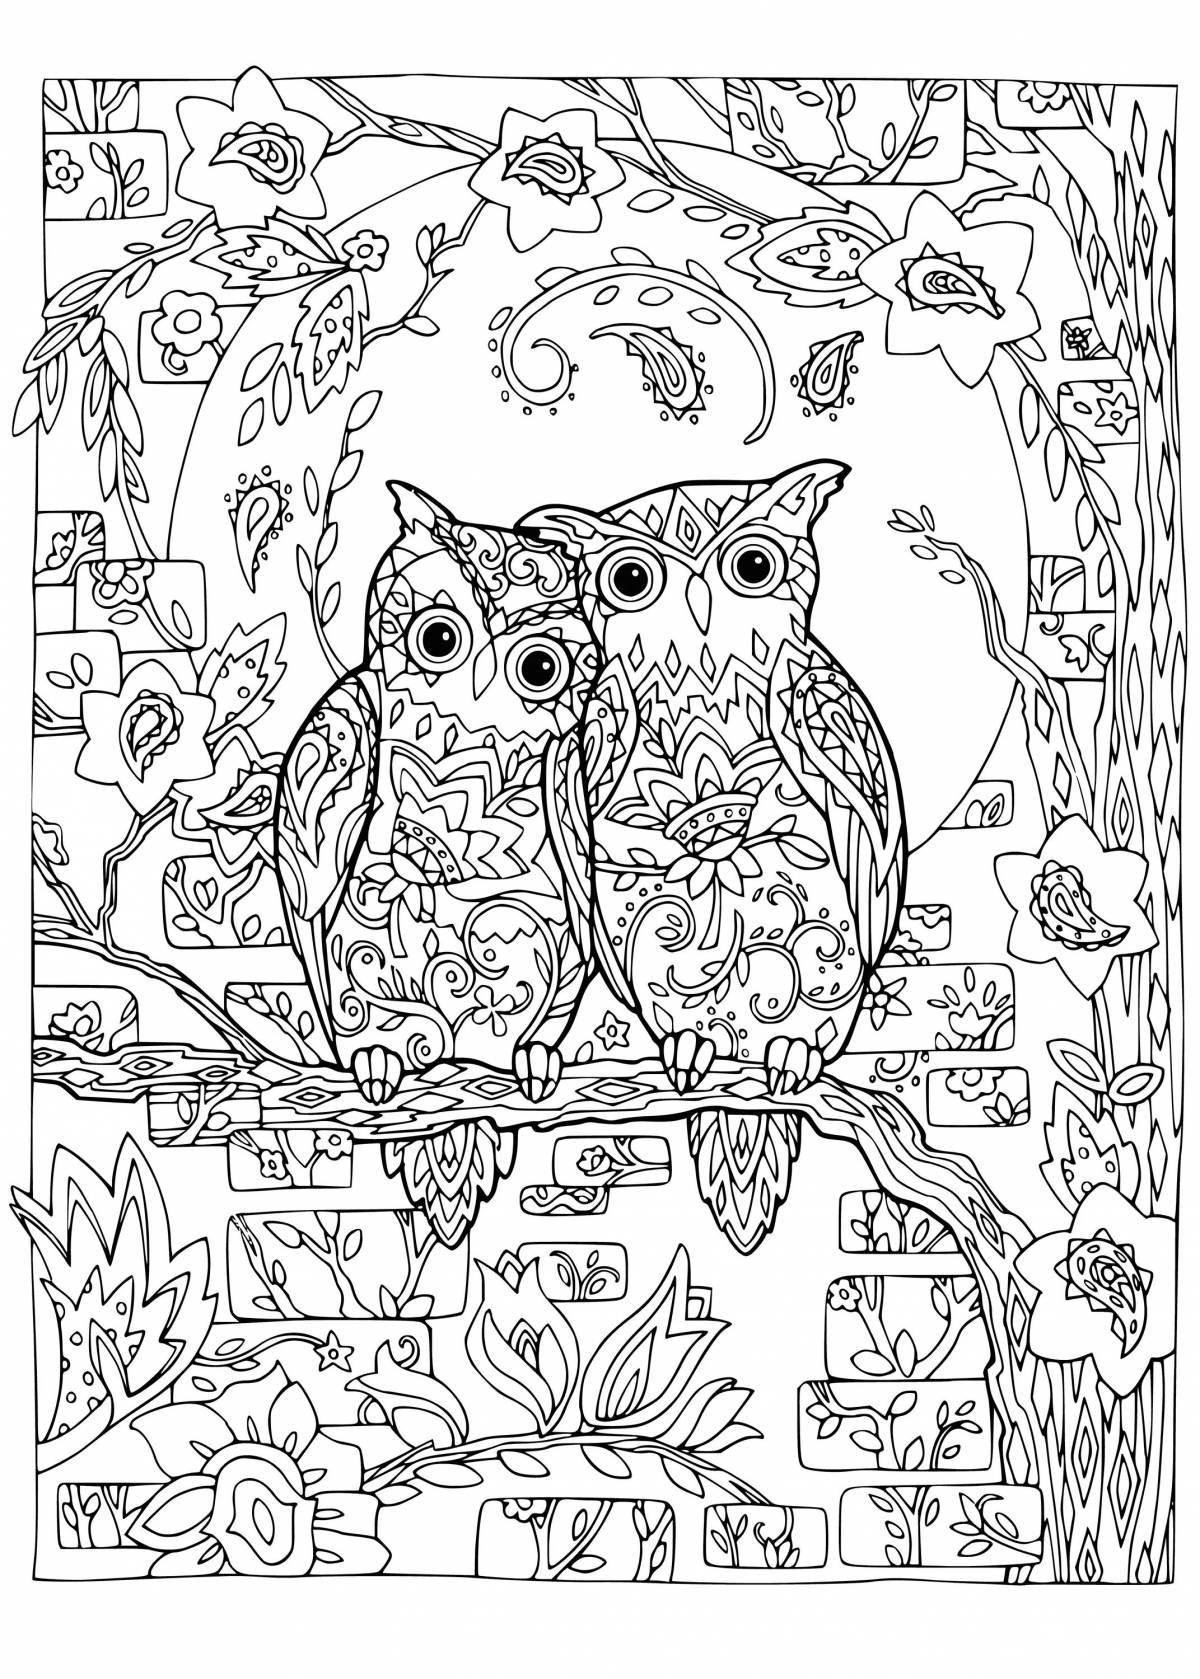 Coloring book joyful anti-stress owls